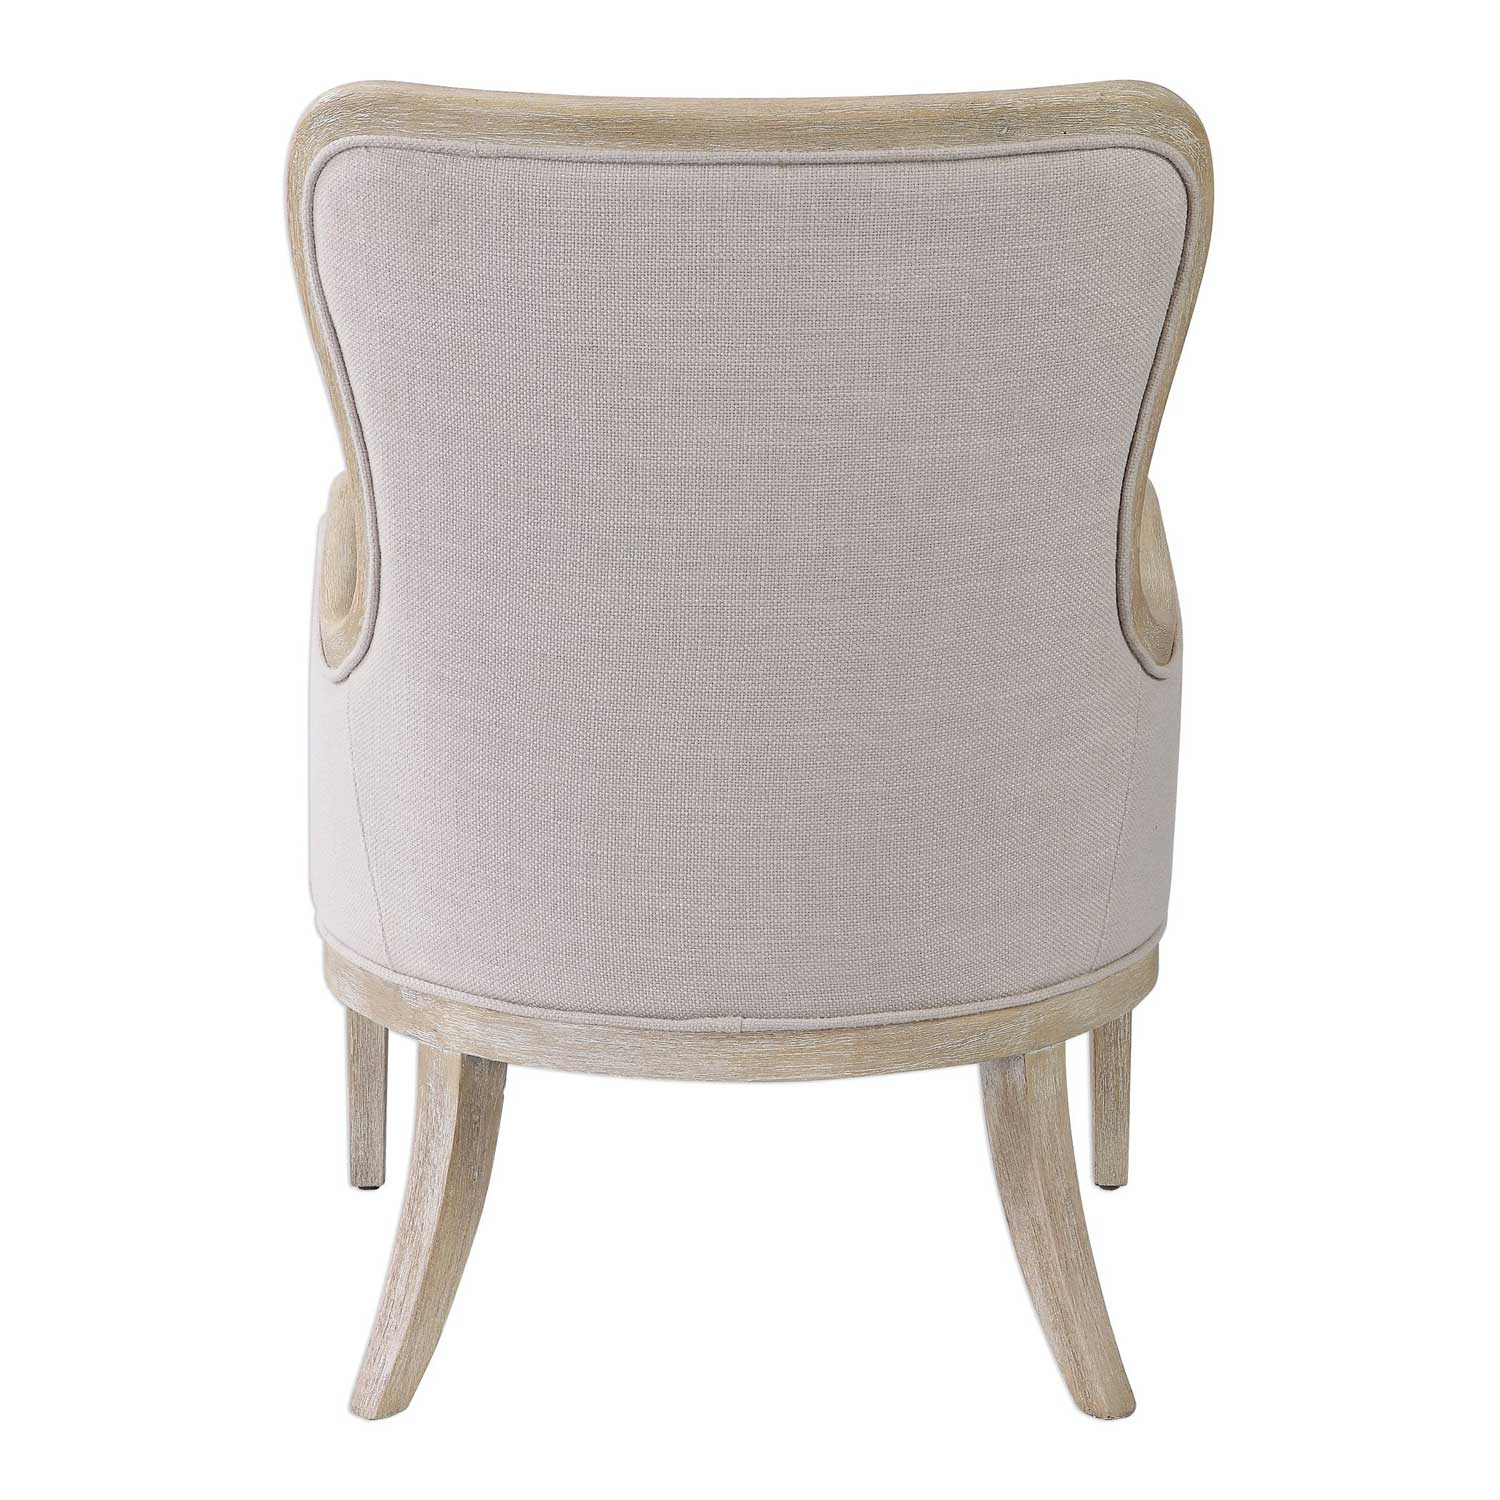 Uttermost Shantel Wing Chair - Oatmeal Gray